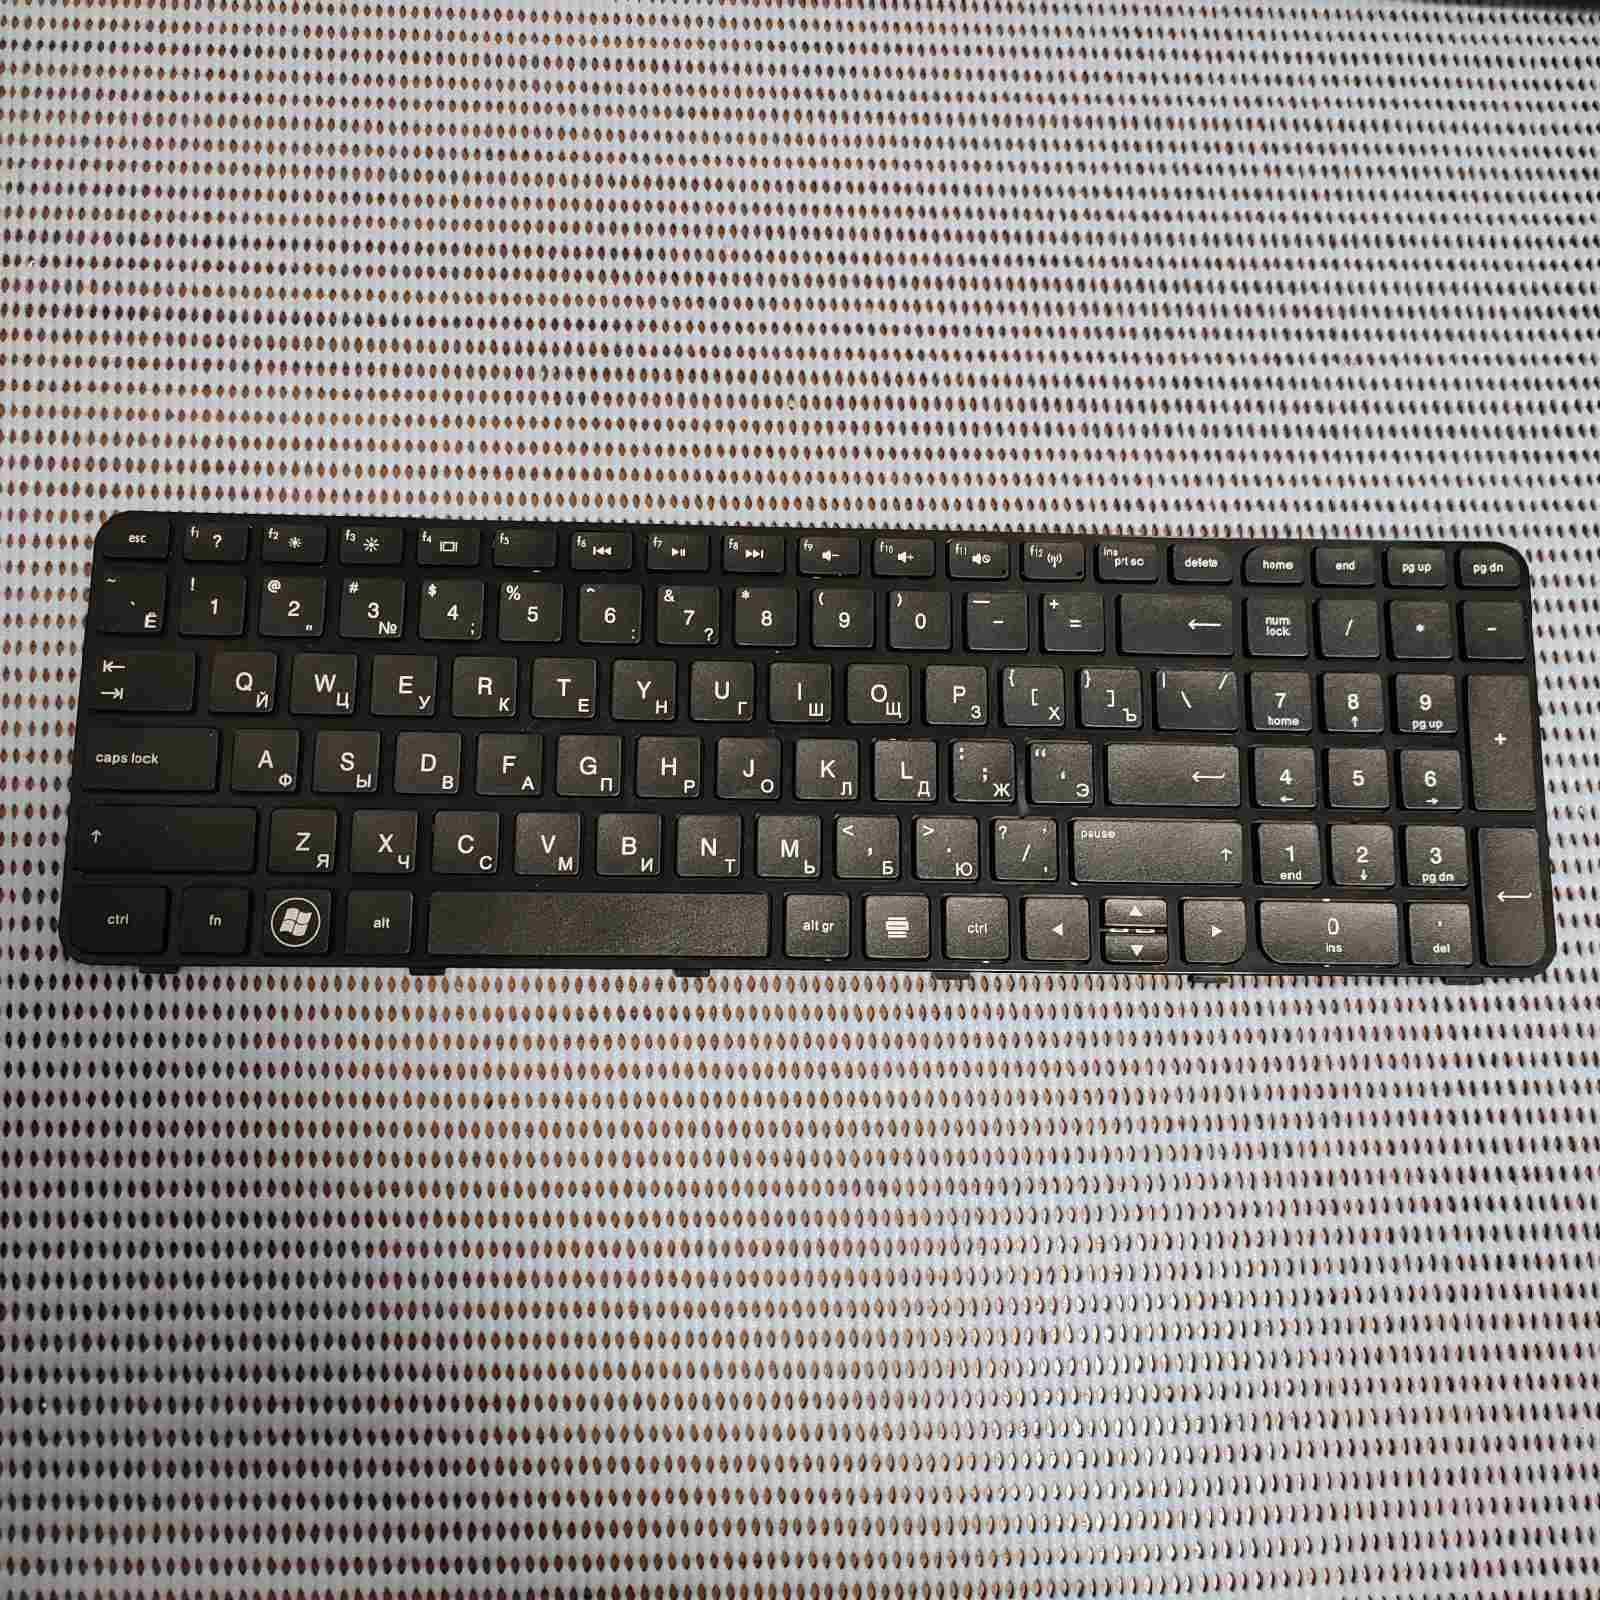 Клавиатура оригинал HP g6 - 2000 series - НОВАЯ